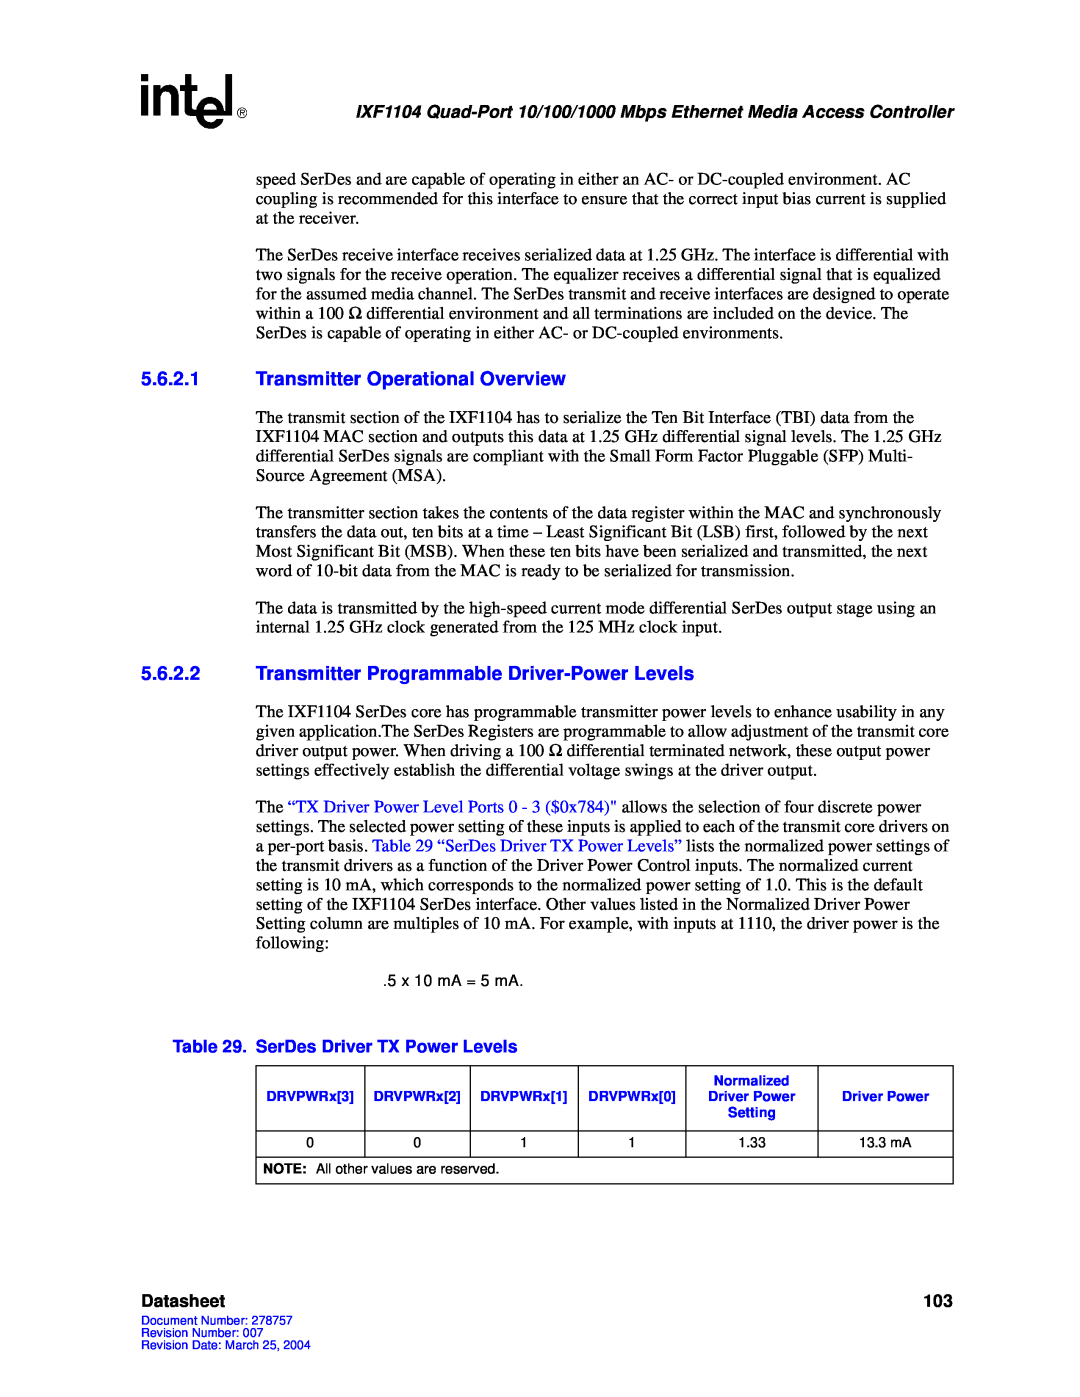 Intel IXF1104 manual 5.6.2.1Transmitter Operational Overview, Datasheet 